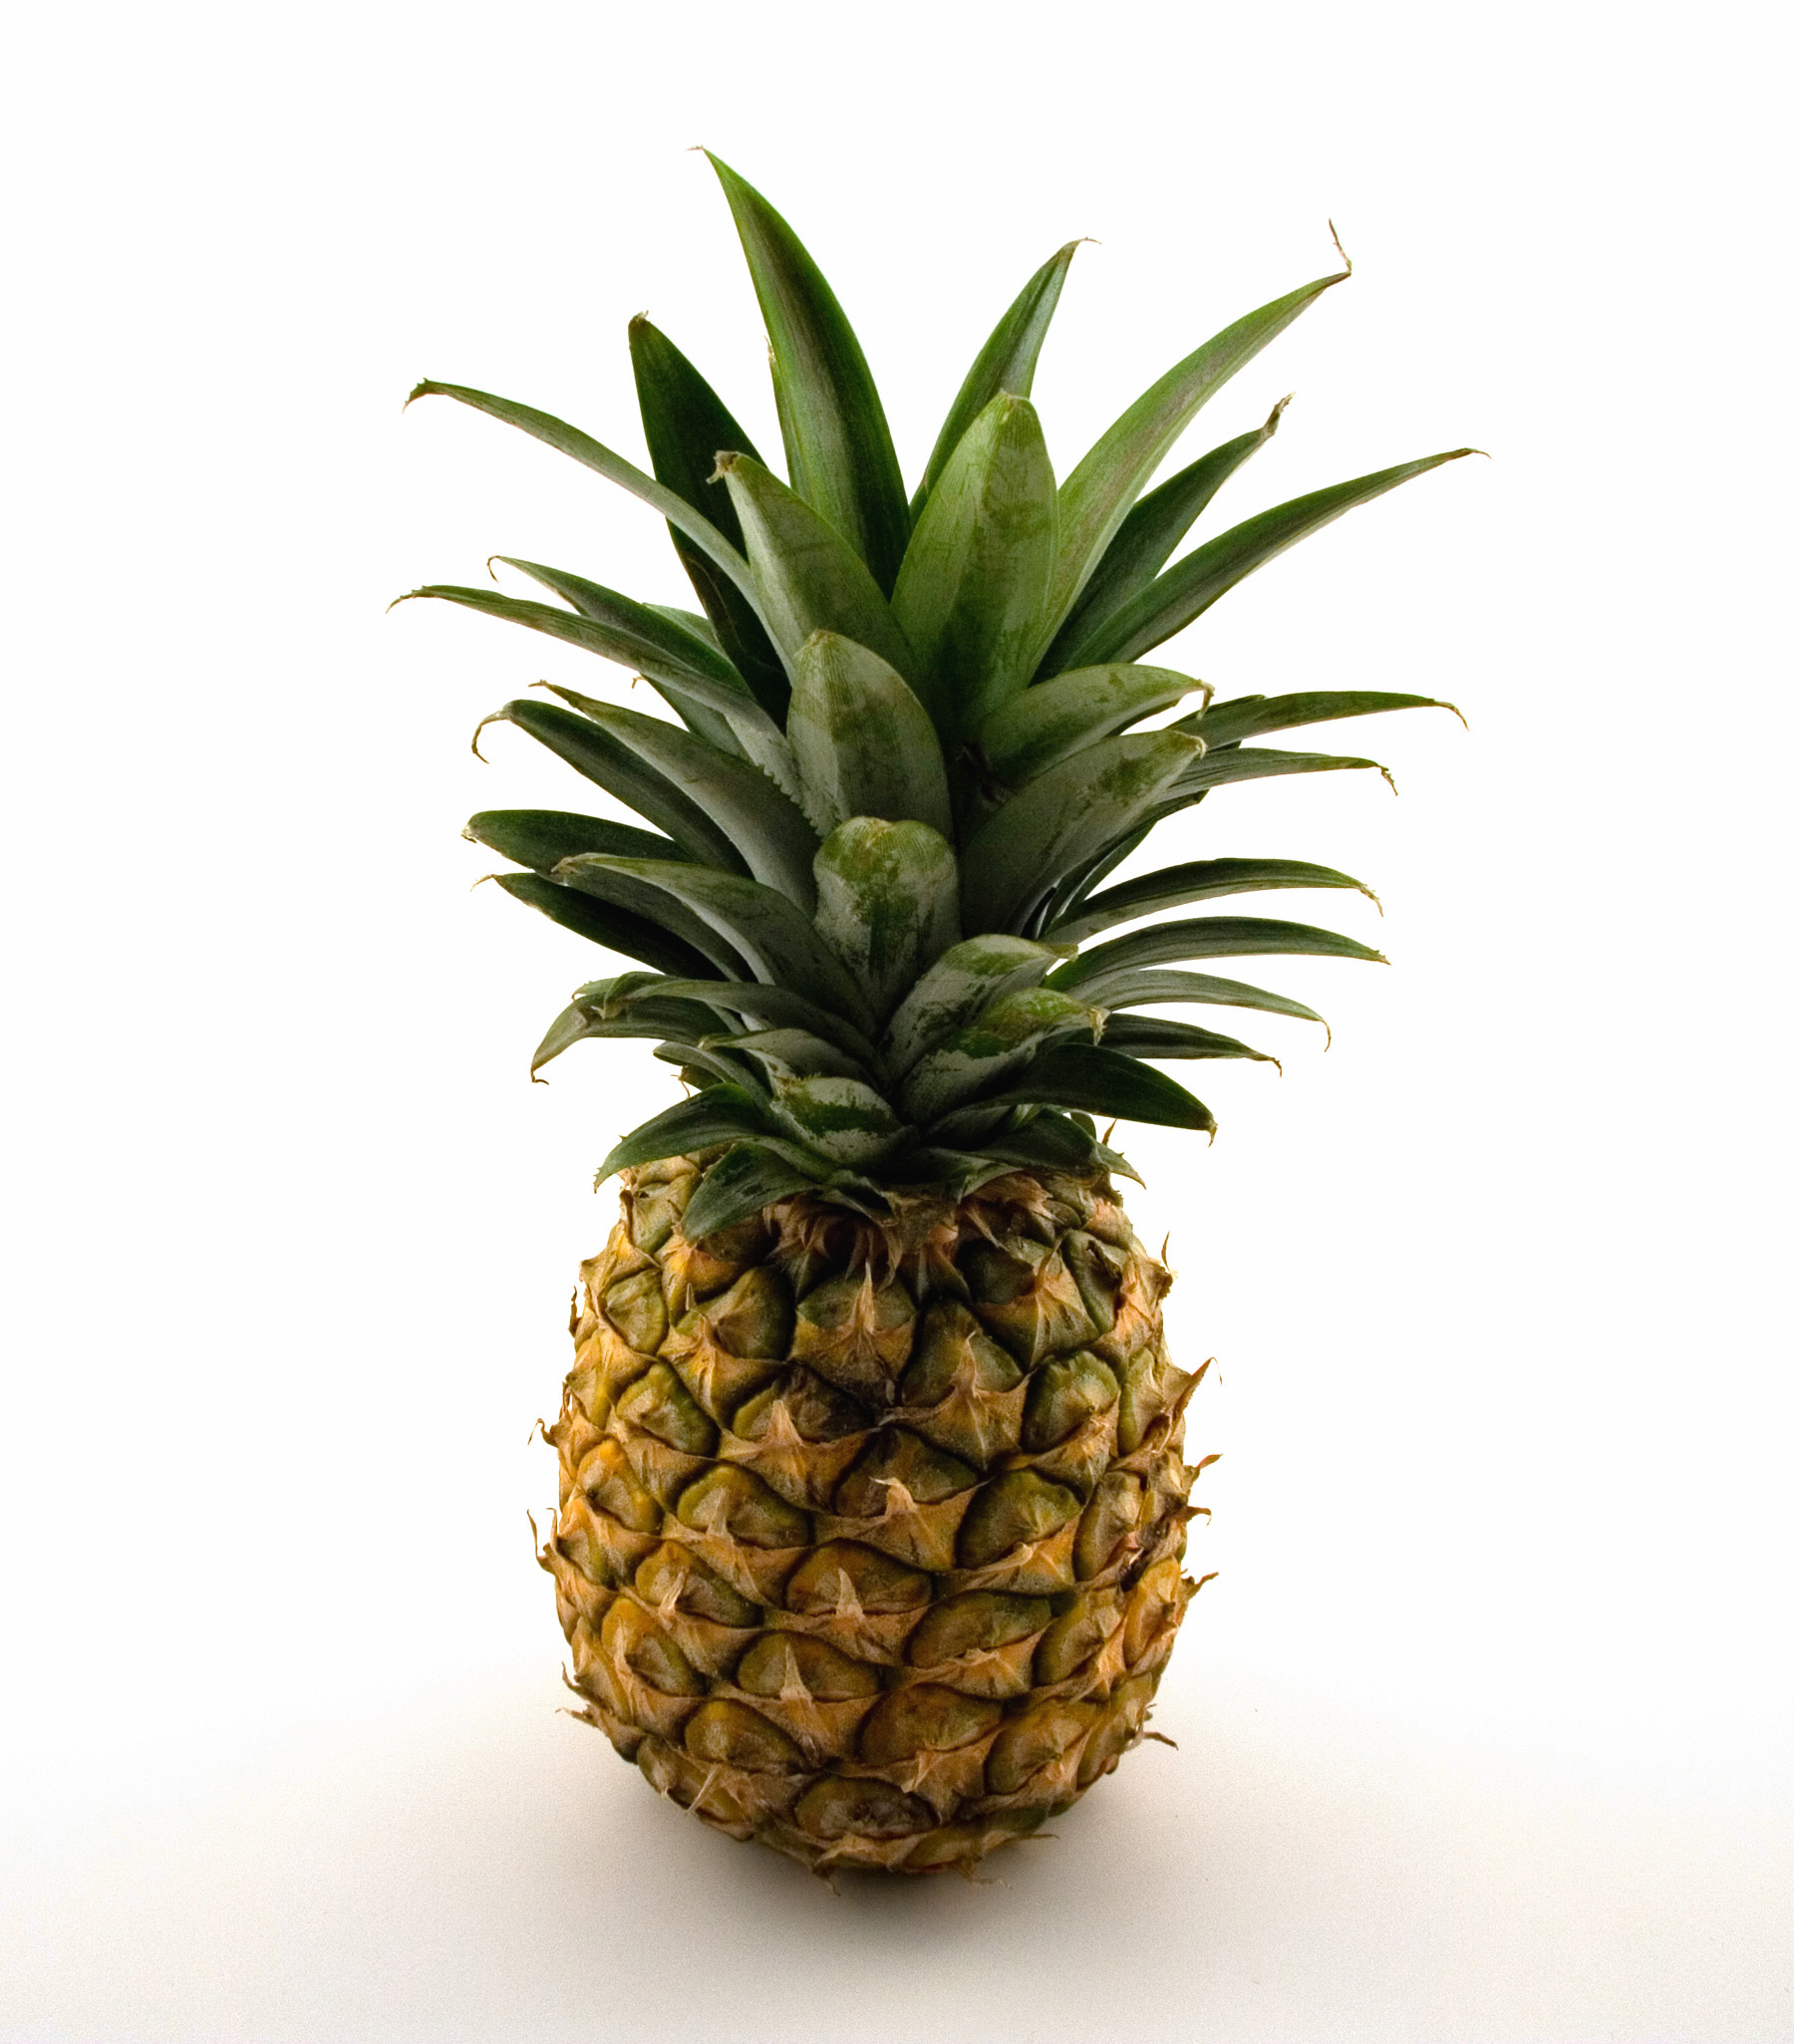 Fresh whole pineapple